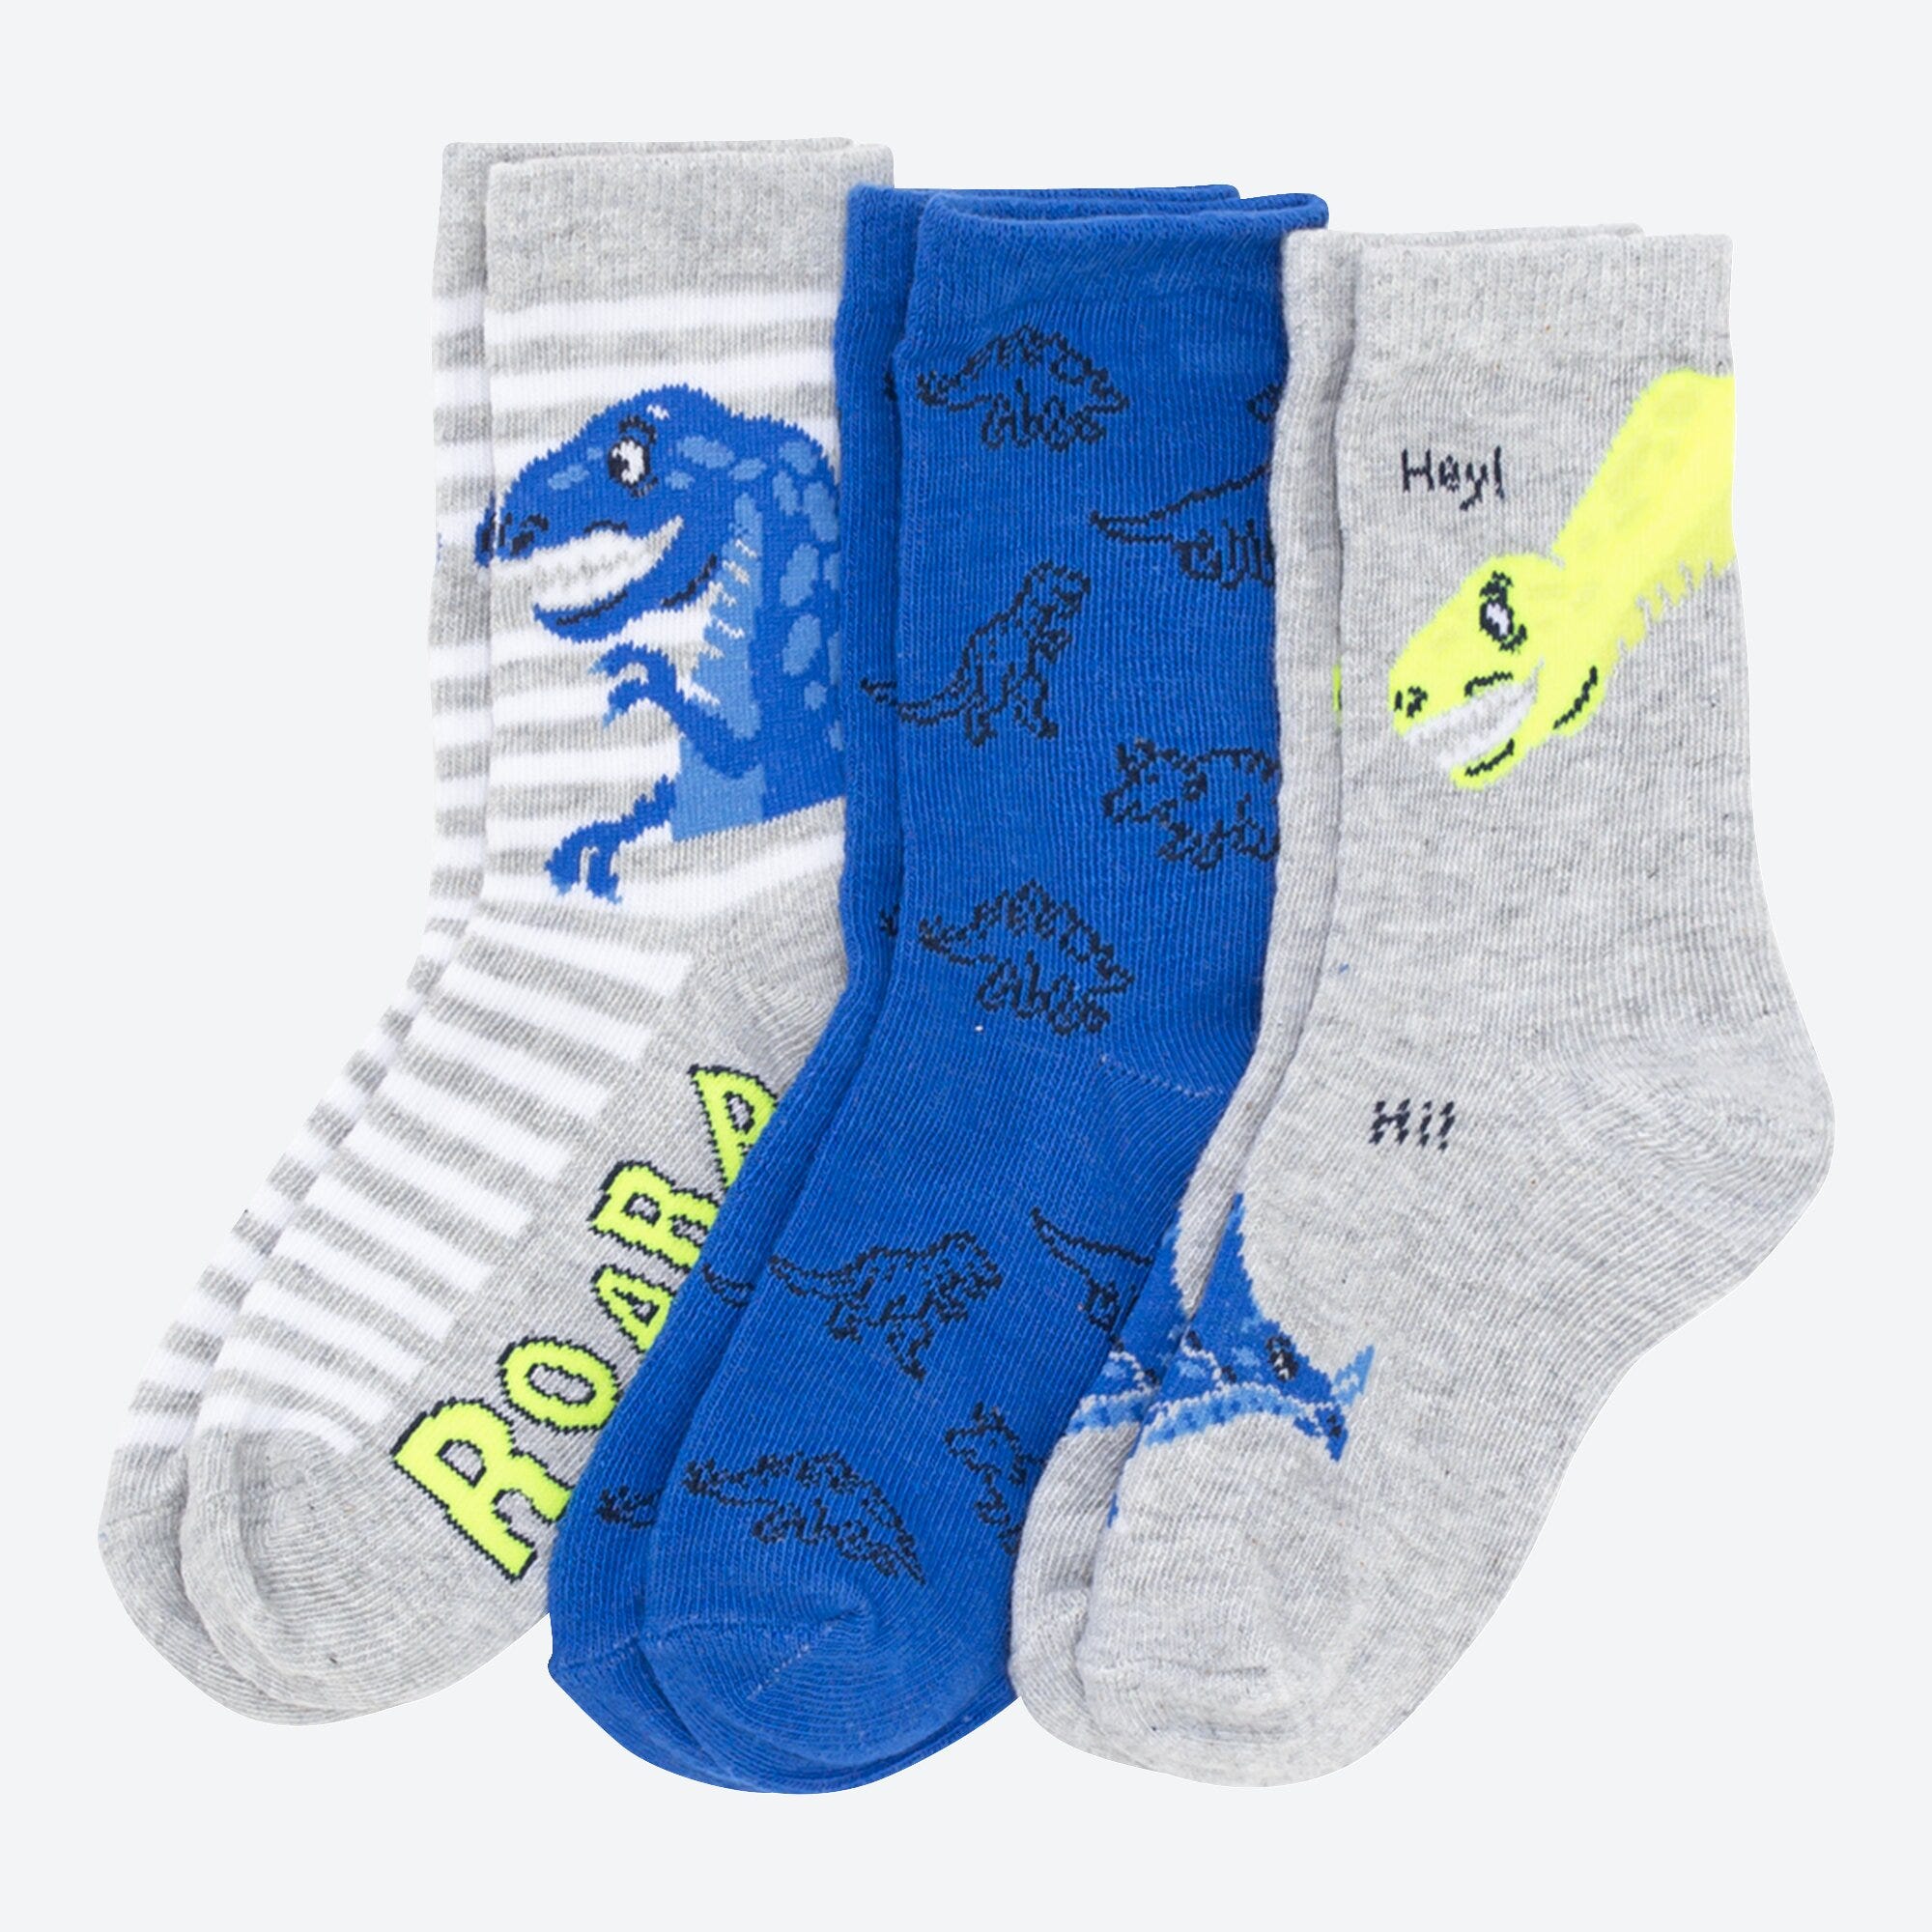 Jungen-Socken mit Dino-Motiven, 3er-Pack